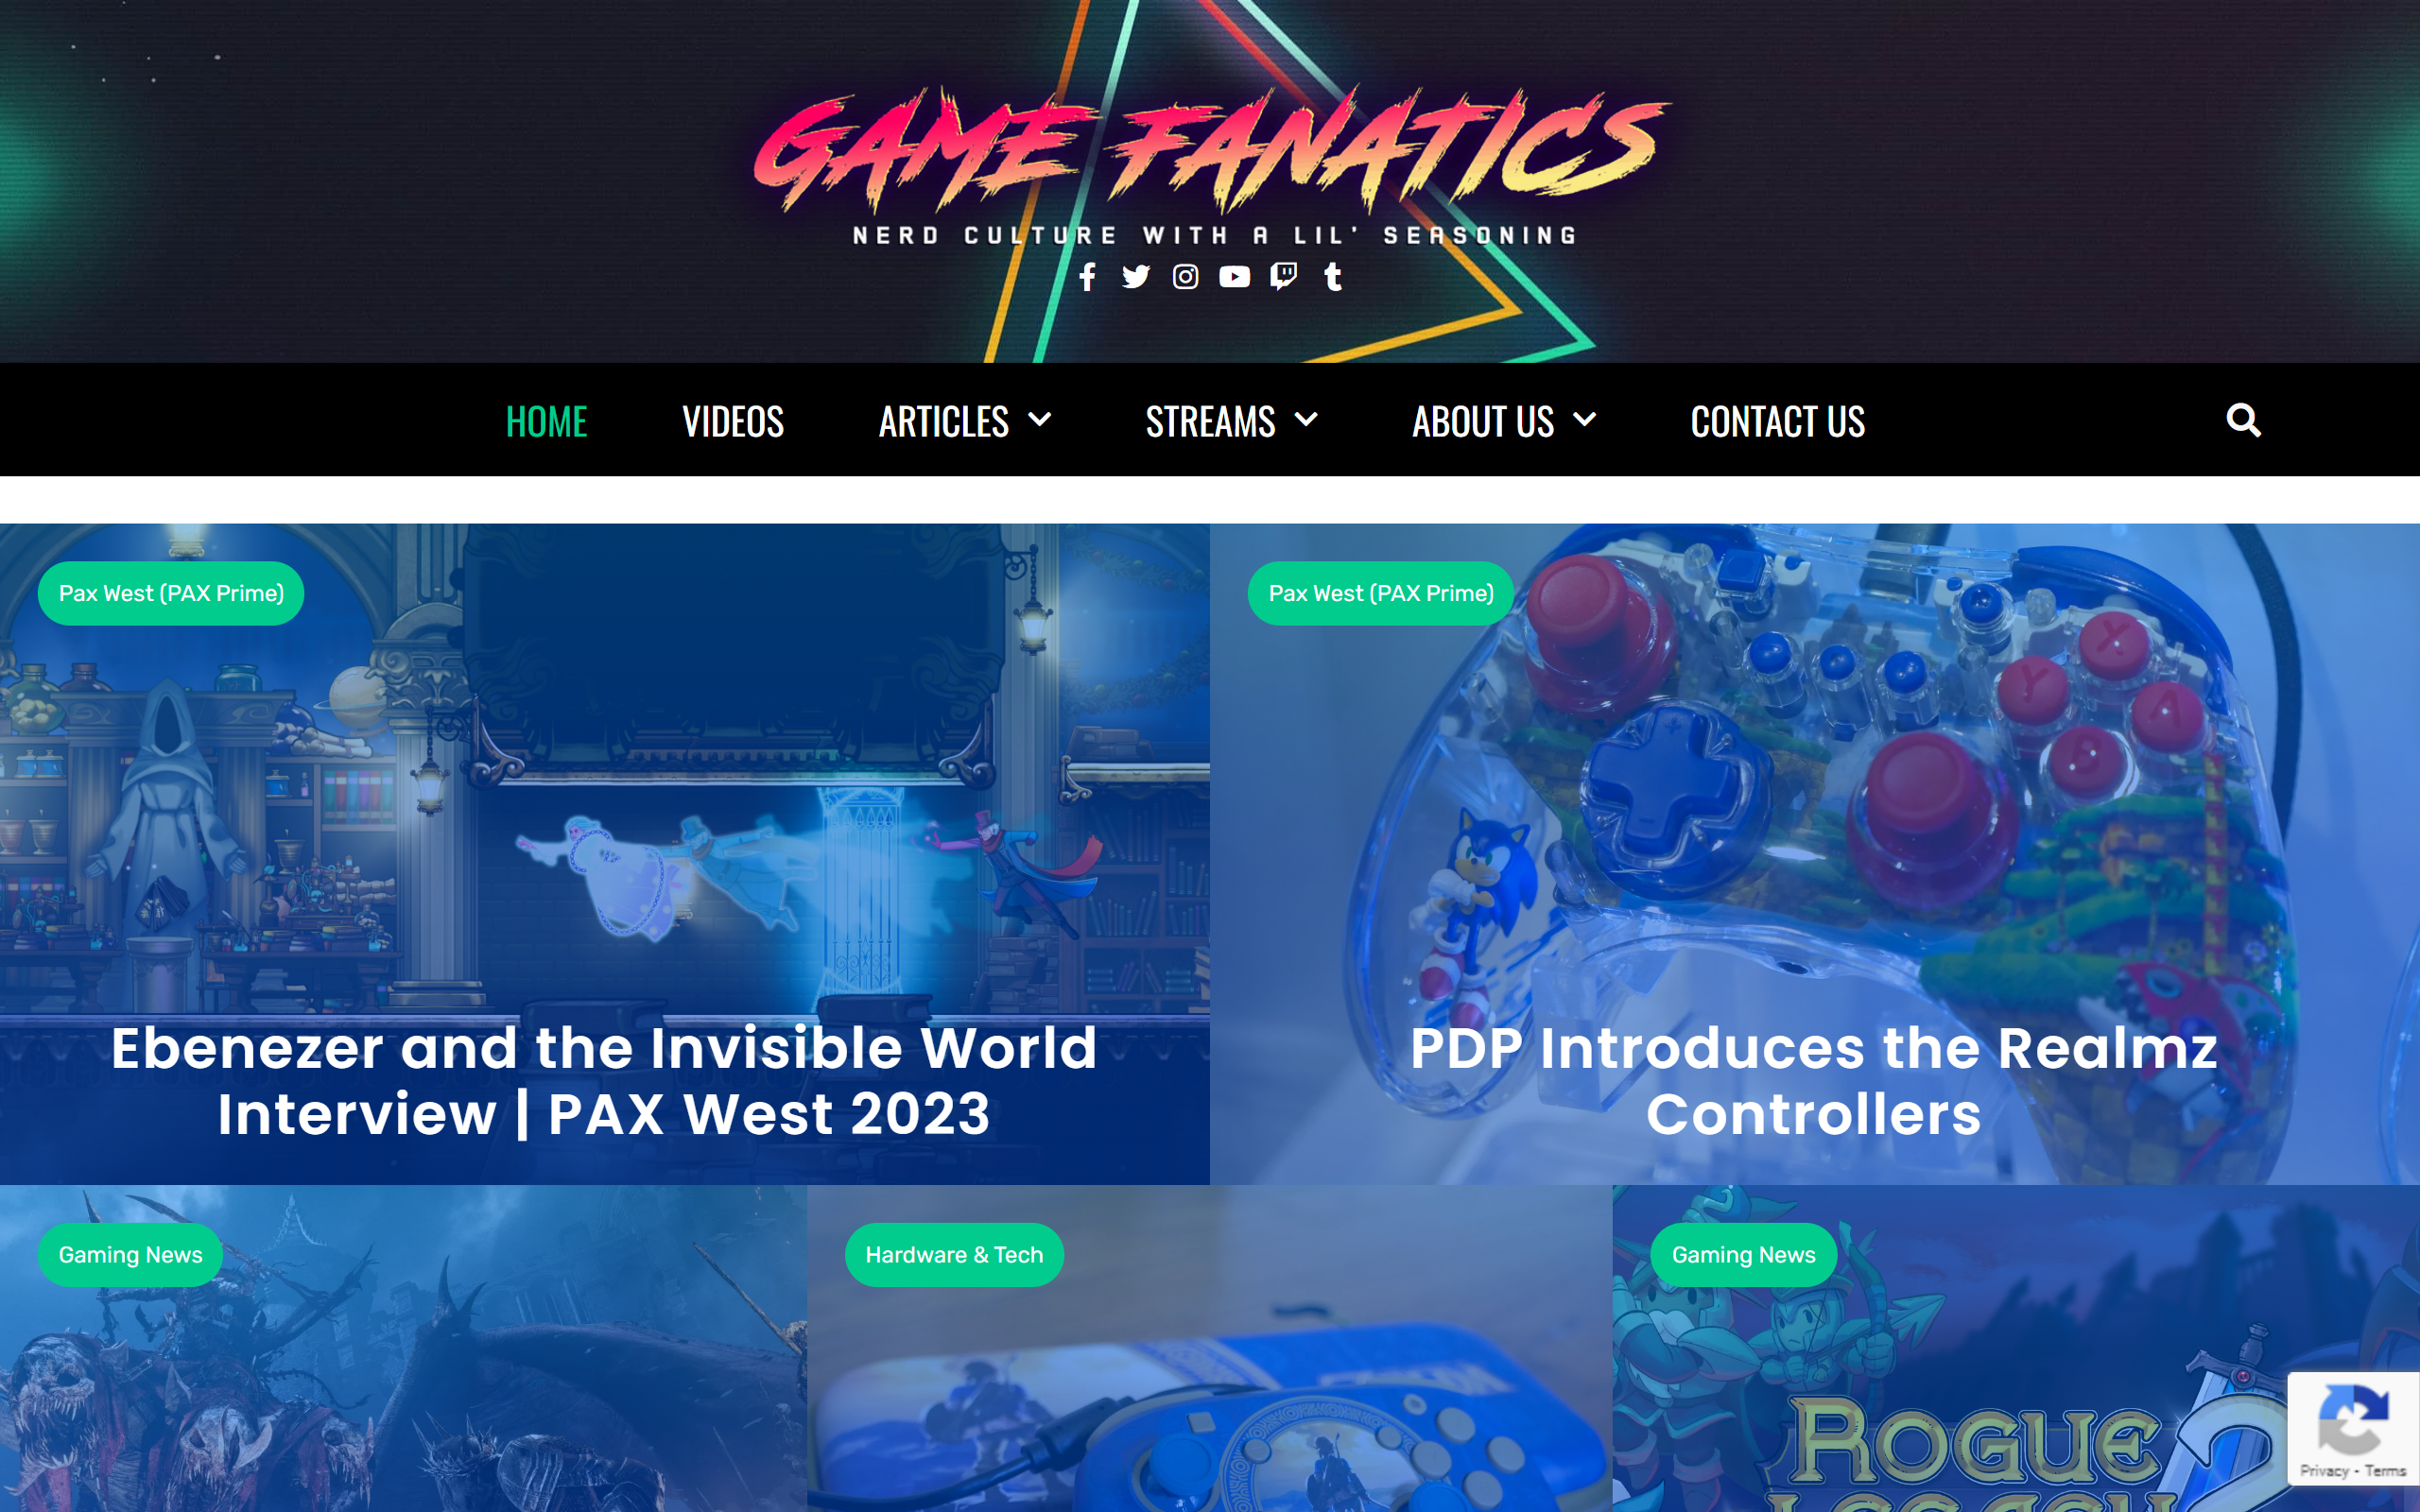 The Game Fanatics gaming blog